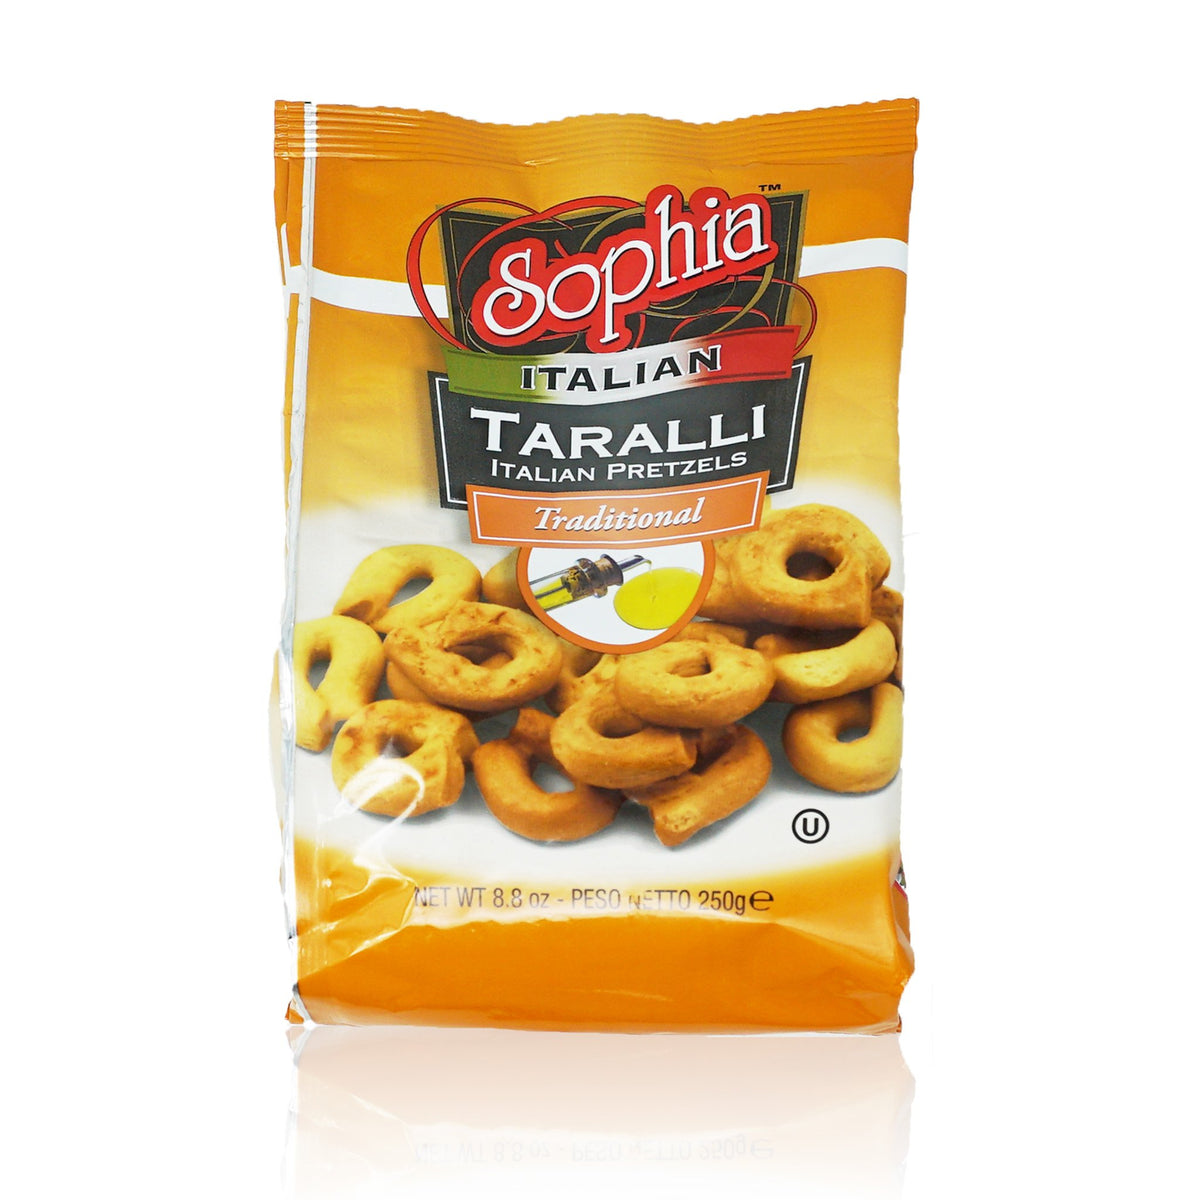 Sophia Taralli Italian Pretzels - Traditional Extra Virgin 8.8oz